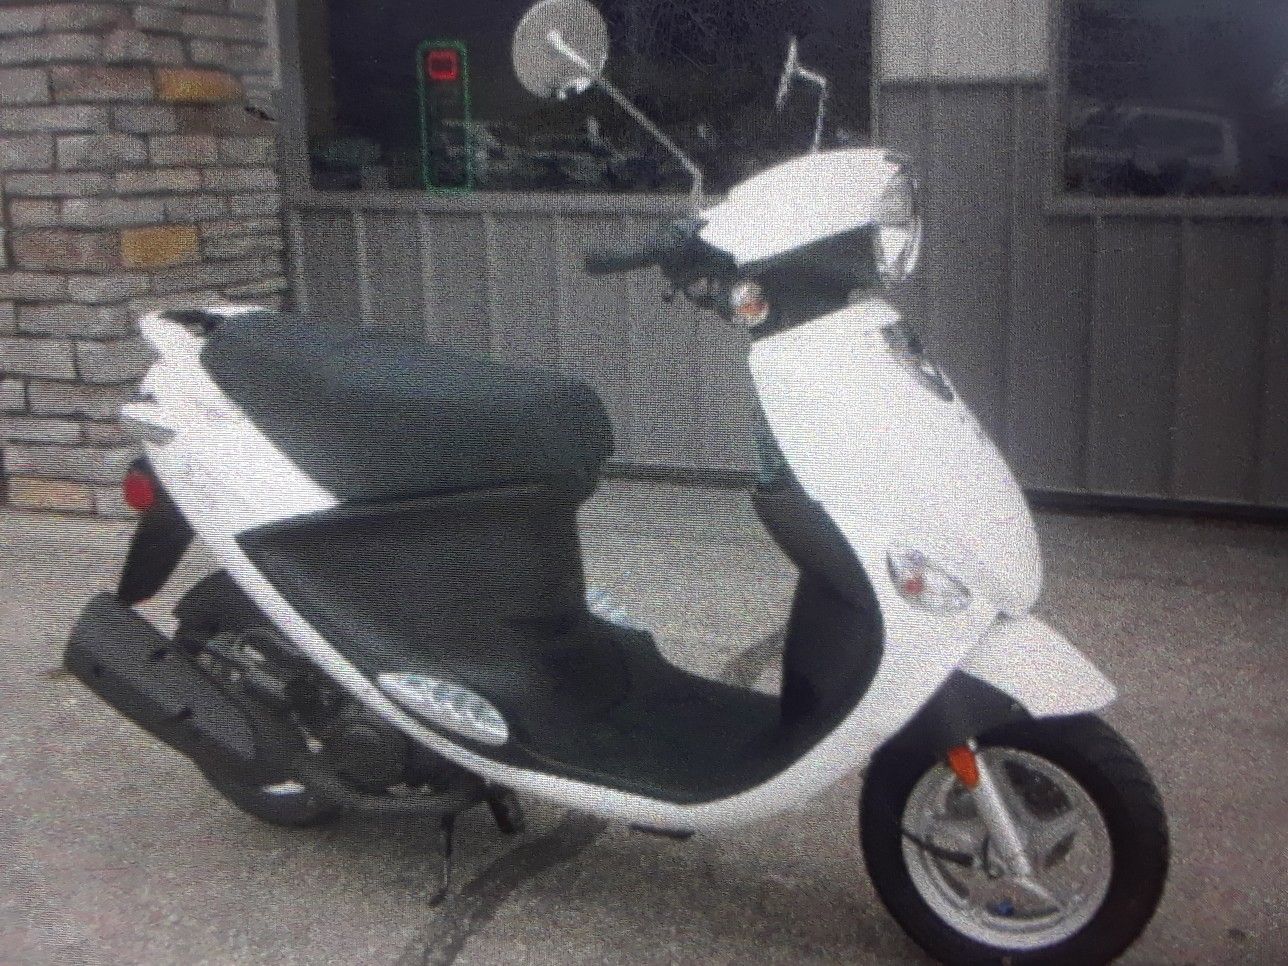 Genuine Buddy 150 scooter